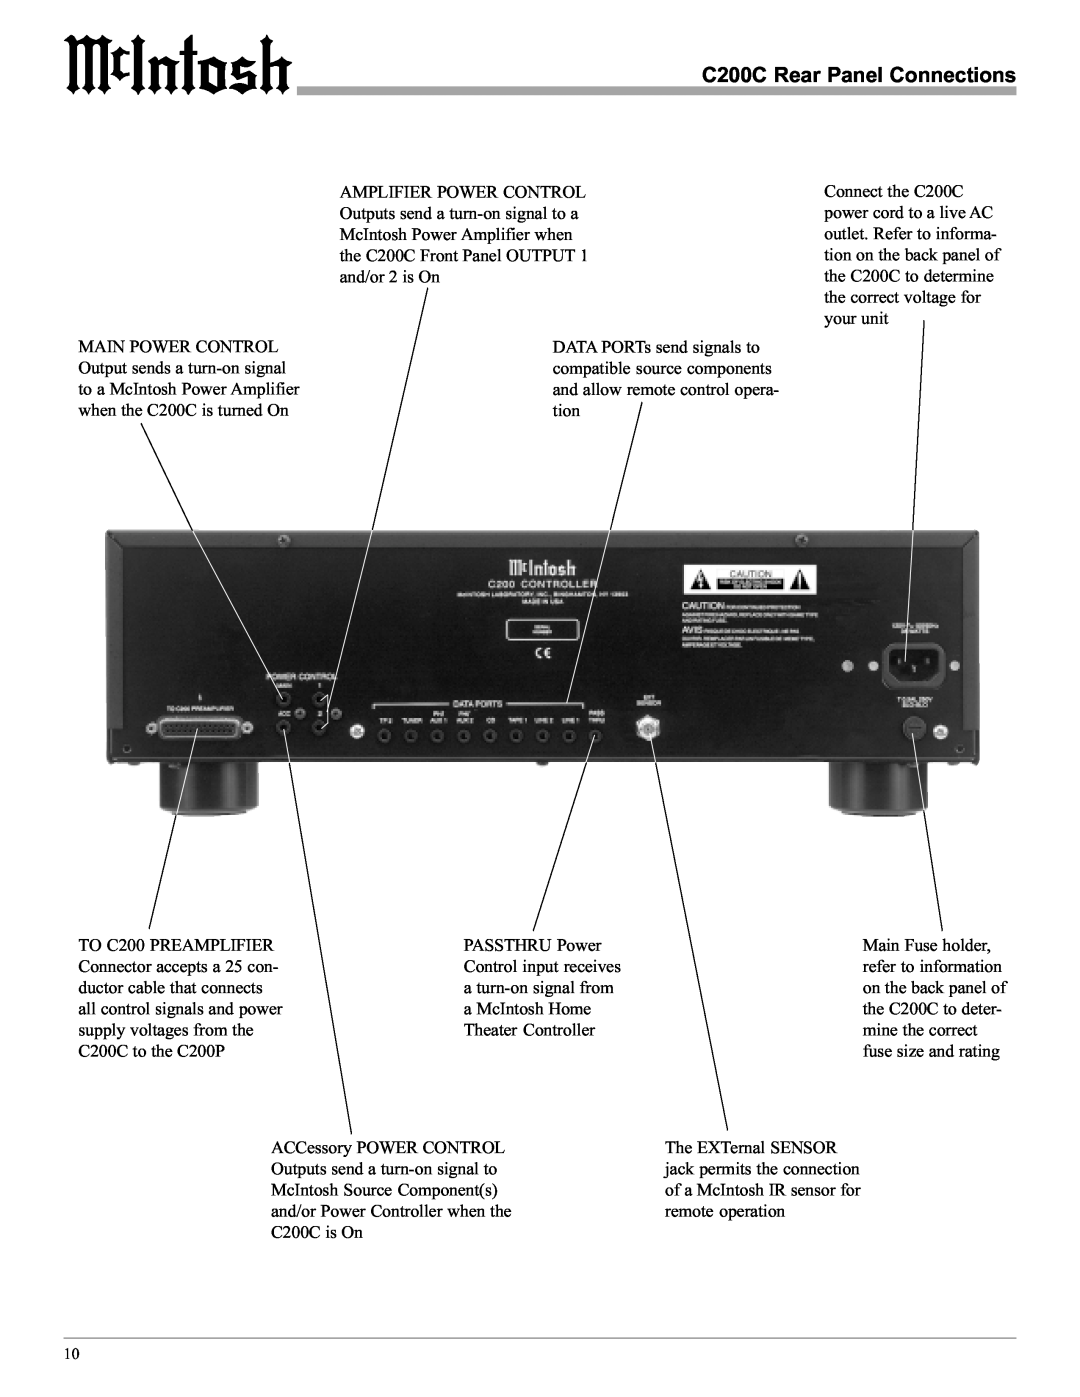 McIntosh manual C200C Rear Panel Connections 